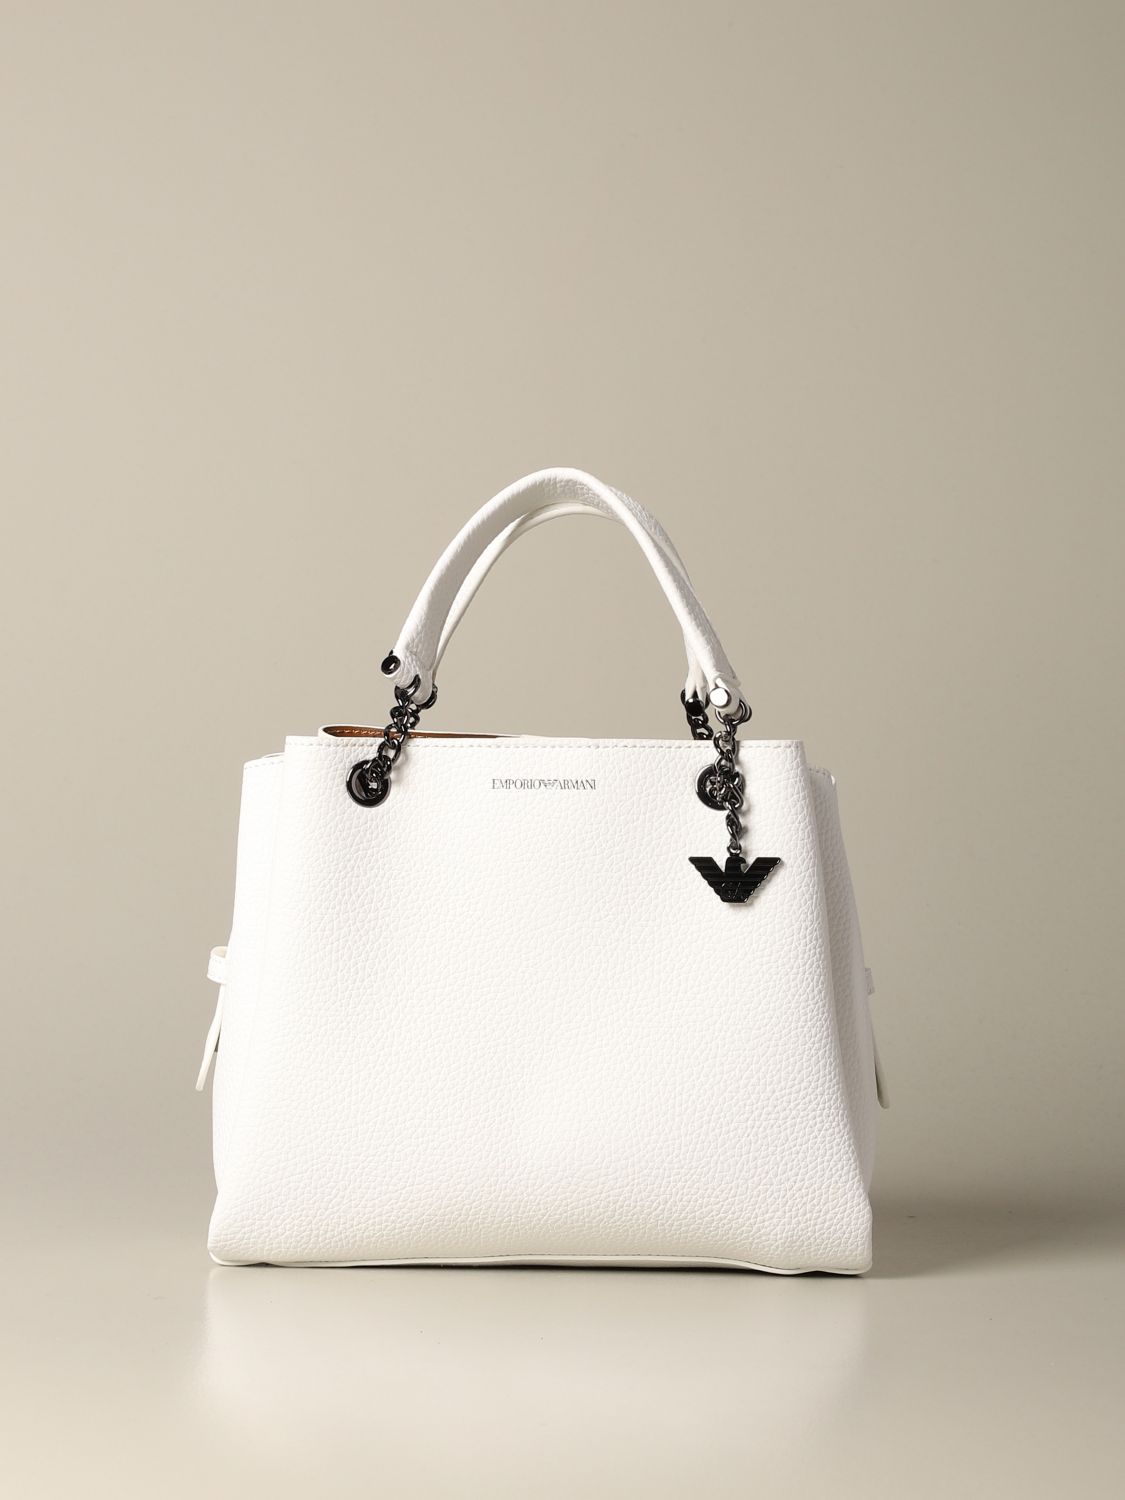 emporio armani women's handbags